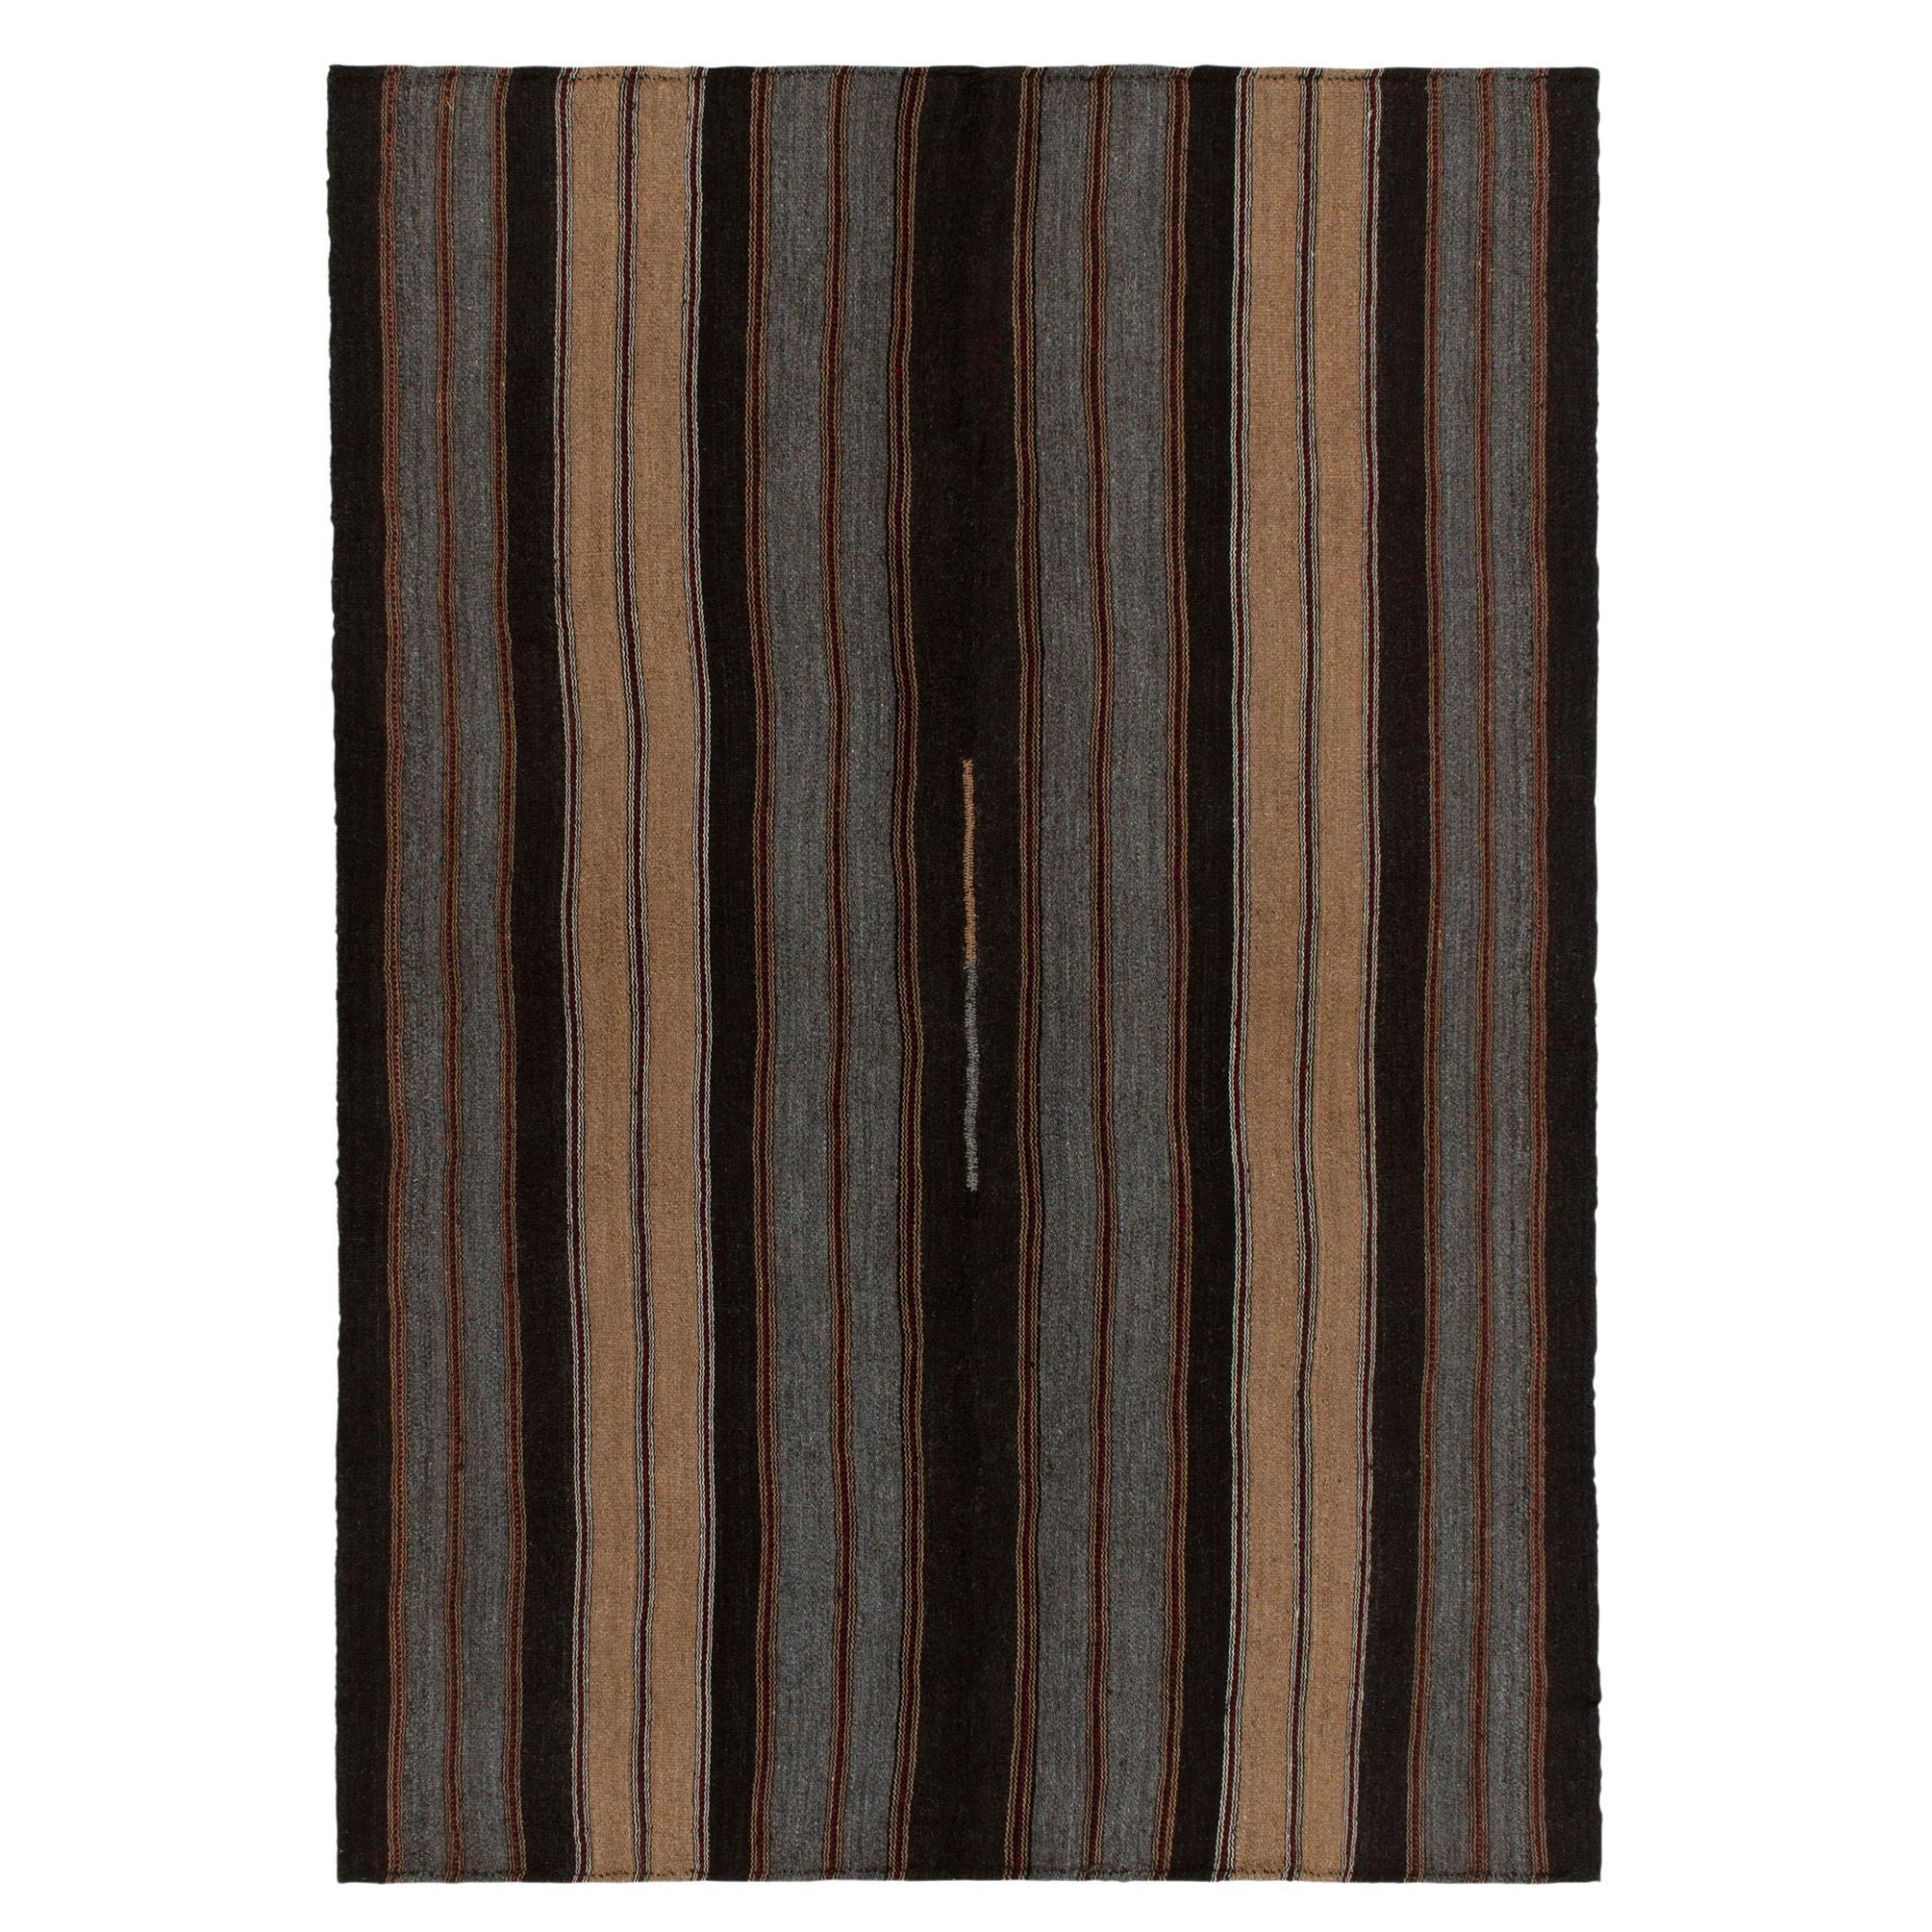 Vintage Kilim Rug in Brown, Beige and Blue Stripe Patterns by Rug & Kilim For Sale